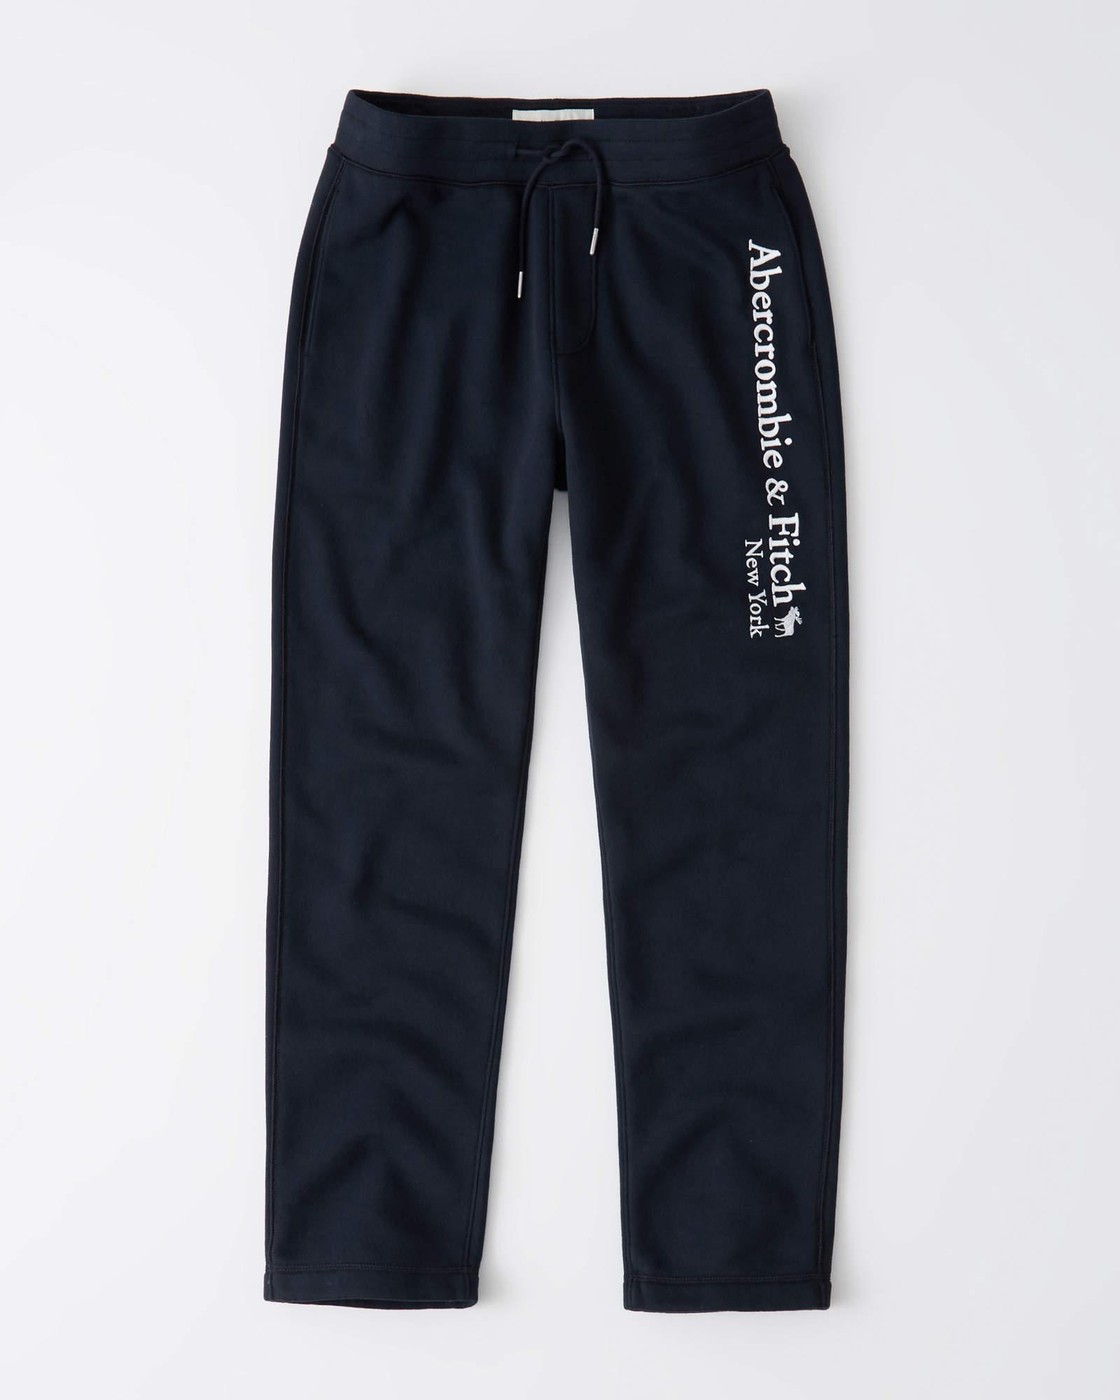 Спортивные штаны Abercrombie & Fitch, XL, XL